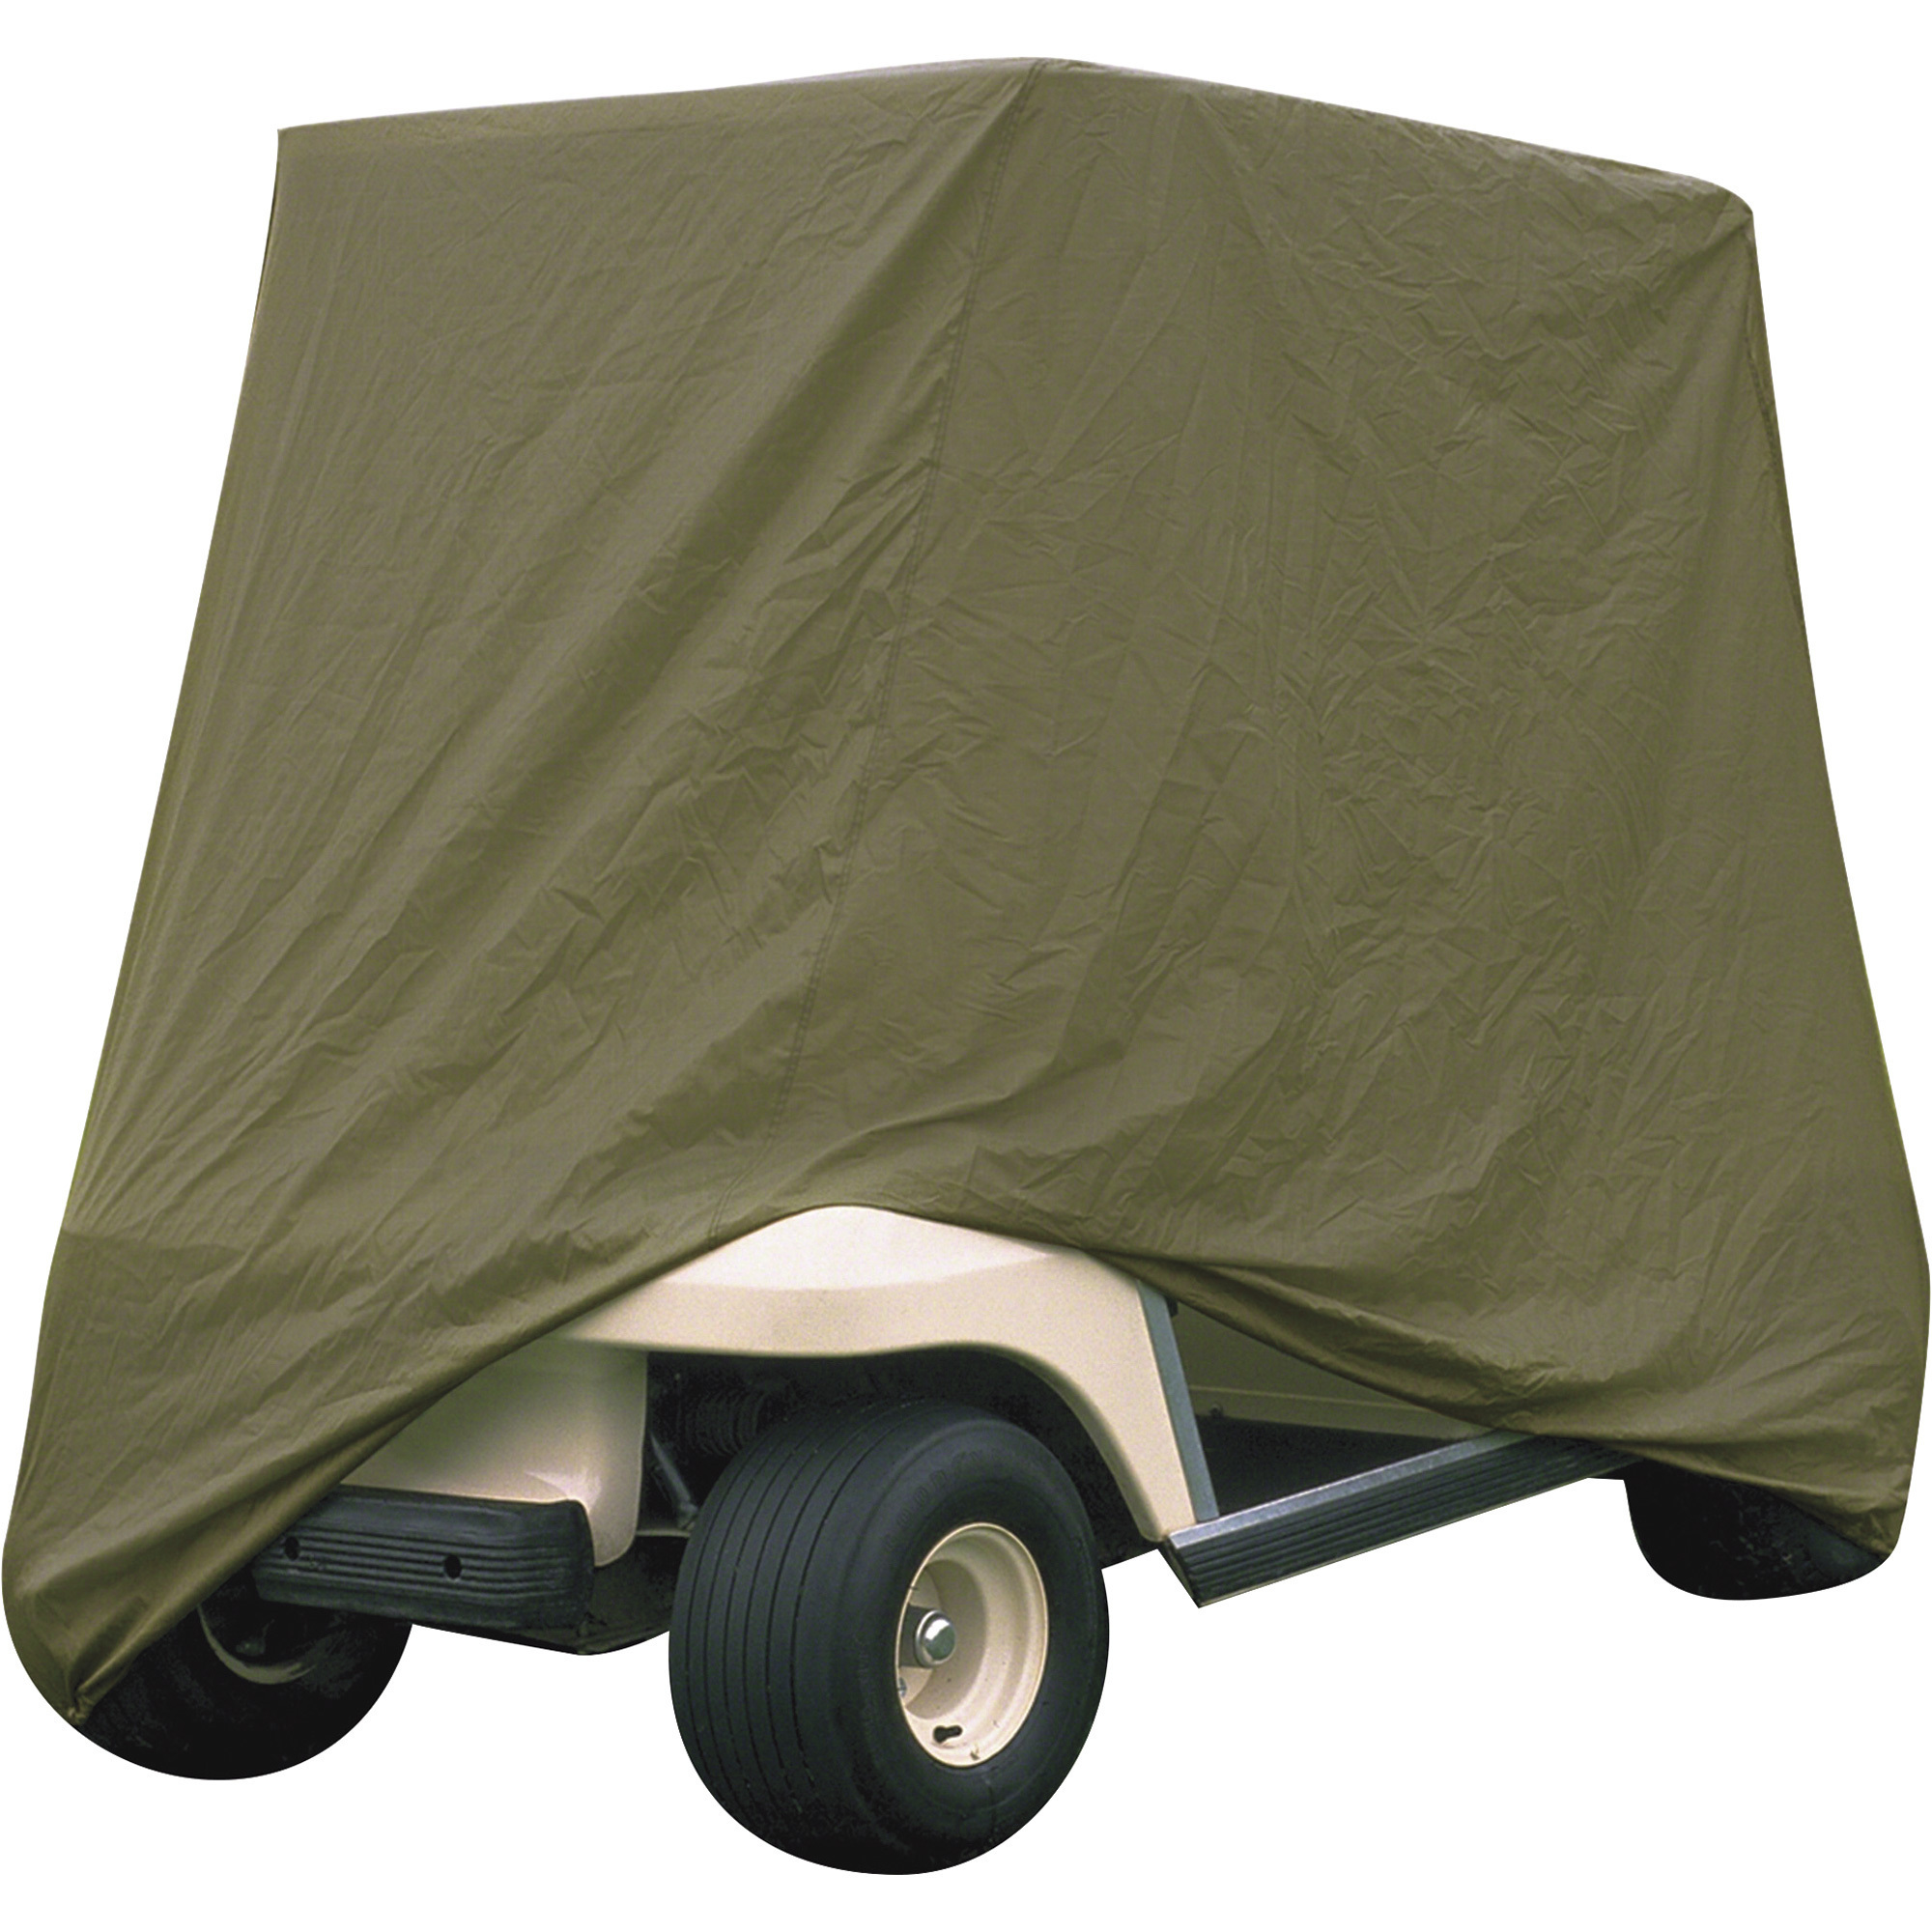 Classic Accessories Fairway Golf Cart Storage Cover, Olive, 93Inch L x 41 1/2Inch W x 61Inch H (60Inch L Roof), Model 72003-SC